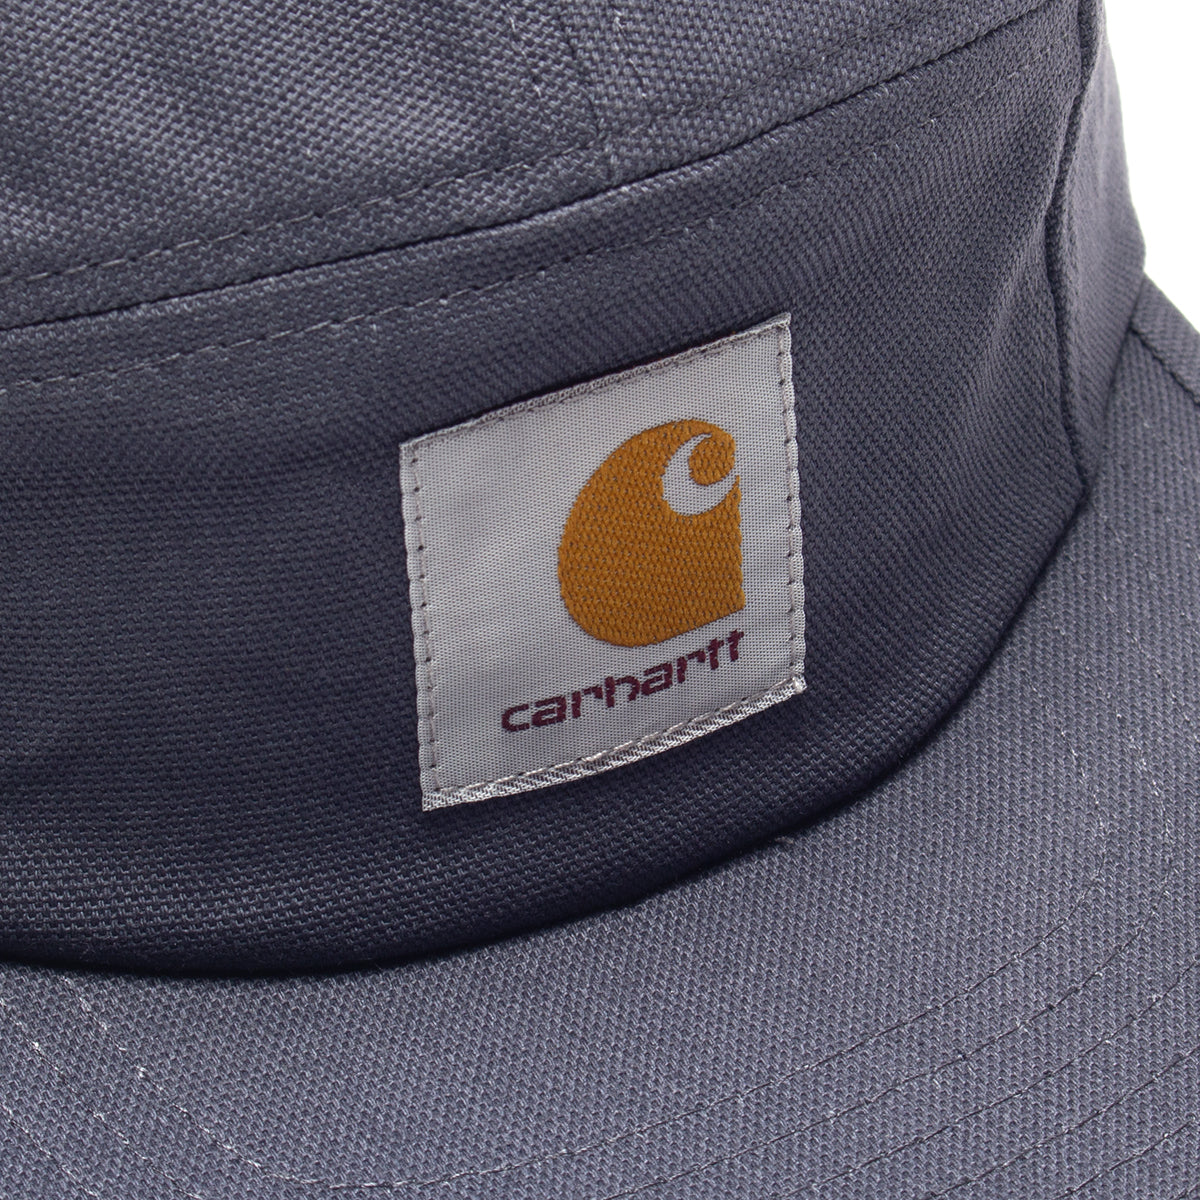 Carhartt Backley Cap Black Casquettes : Snowleader